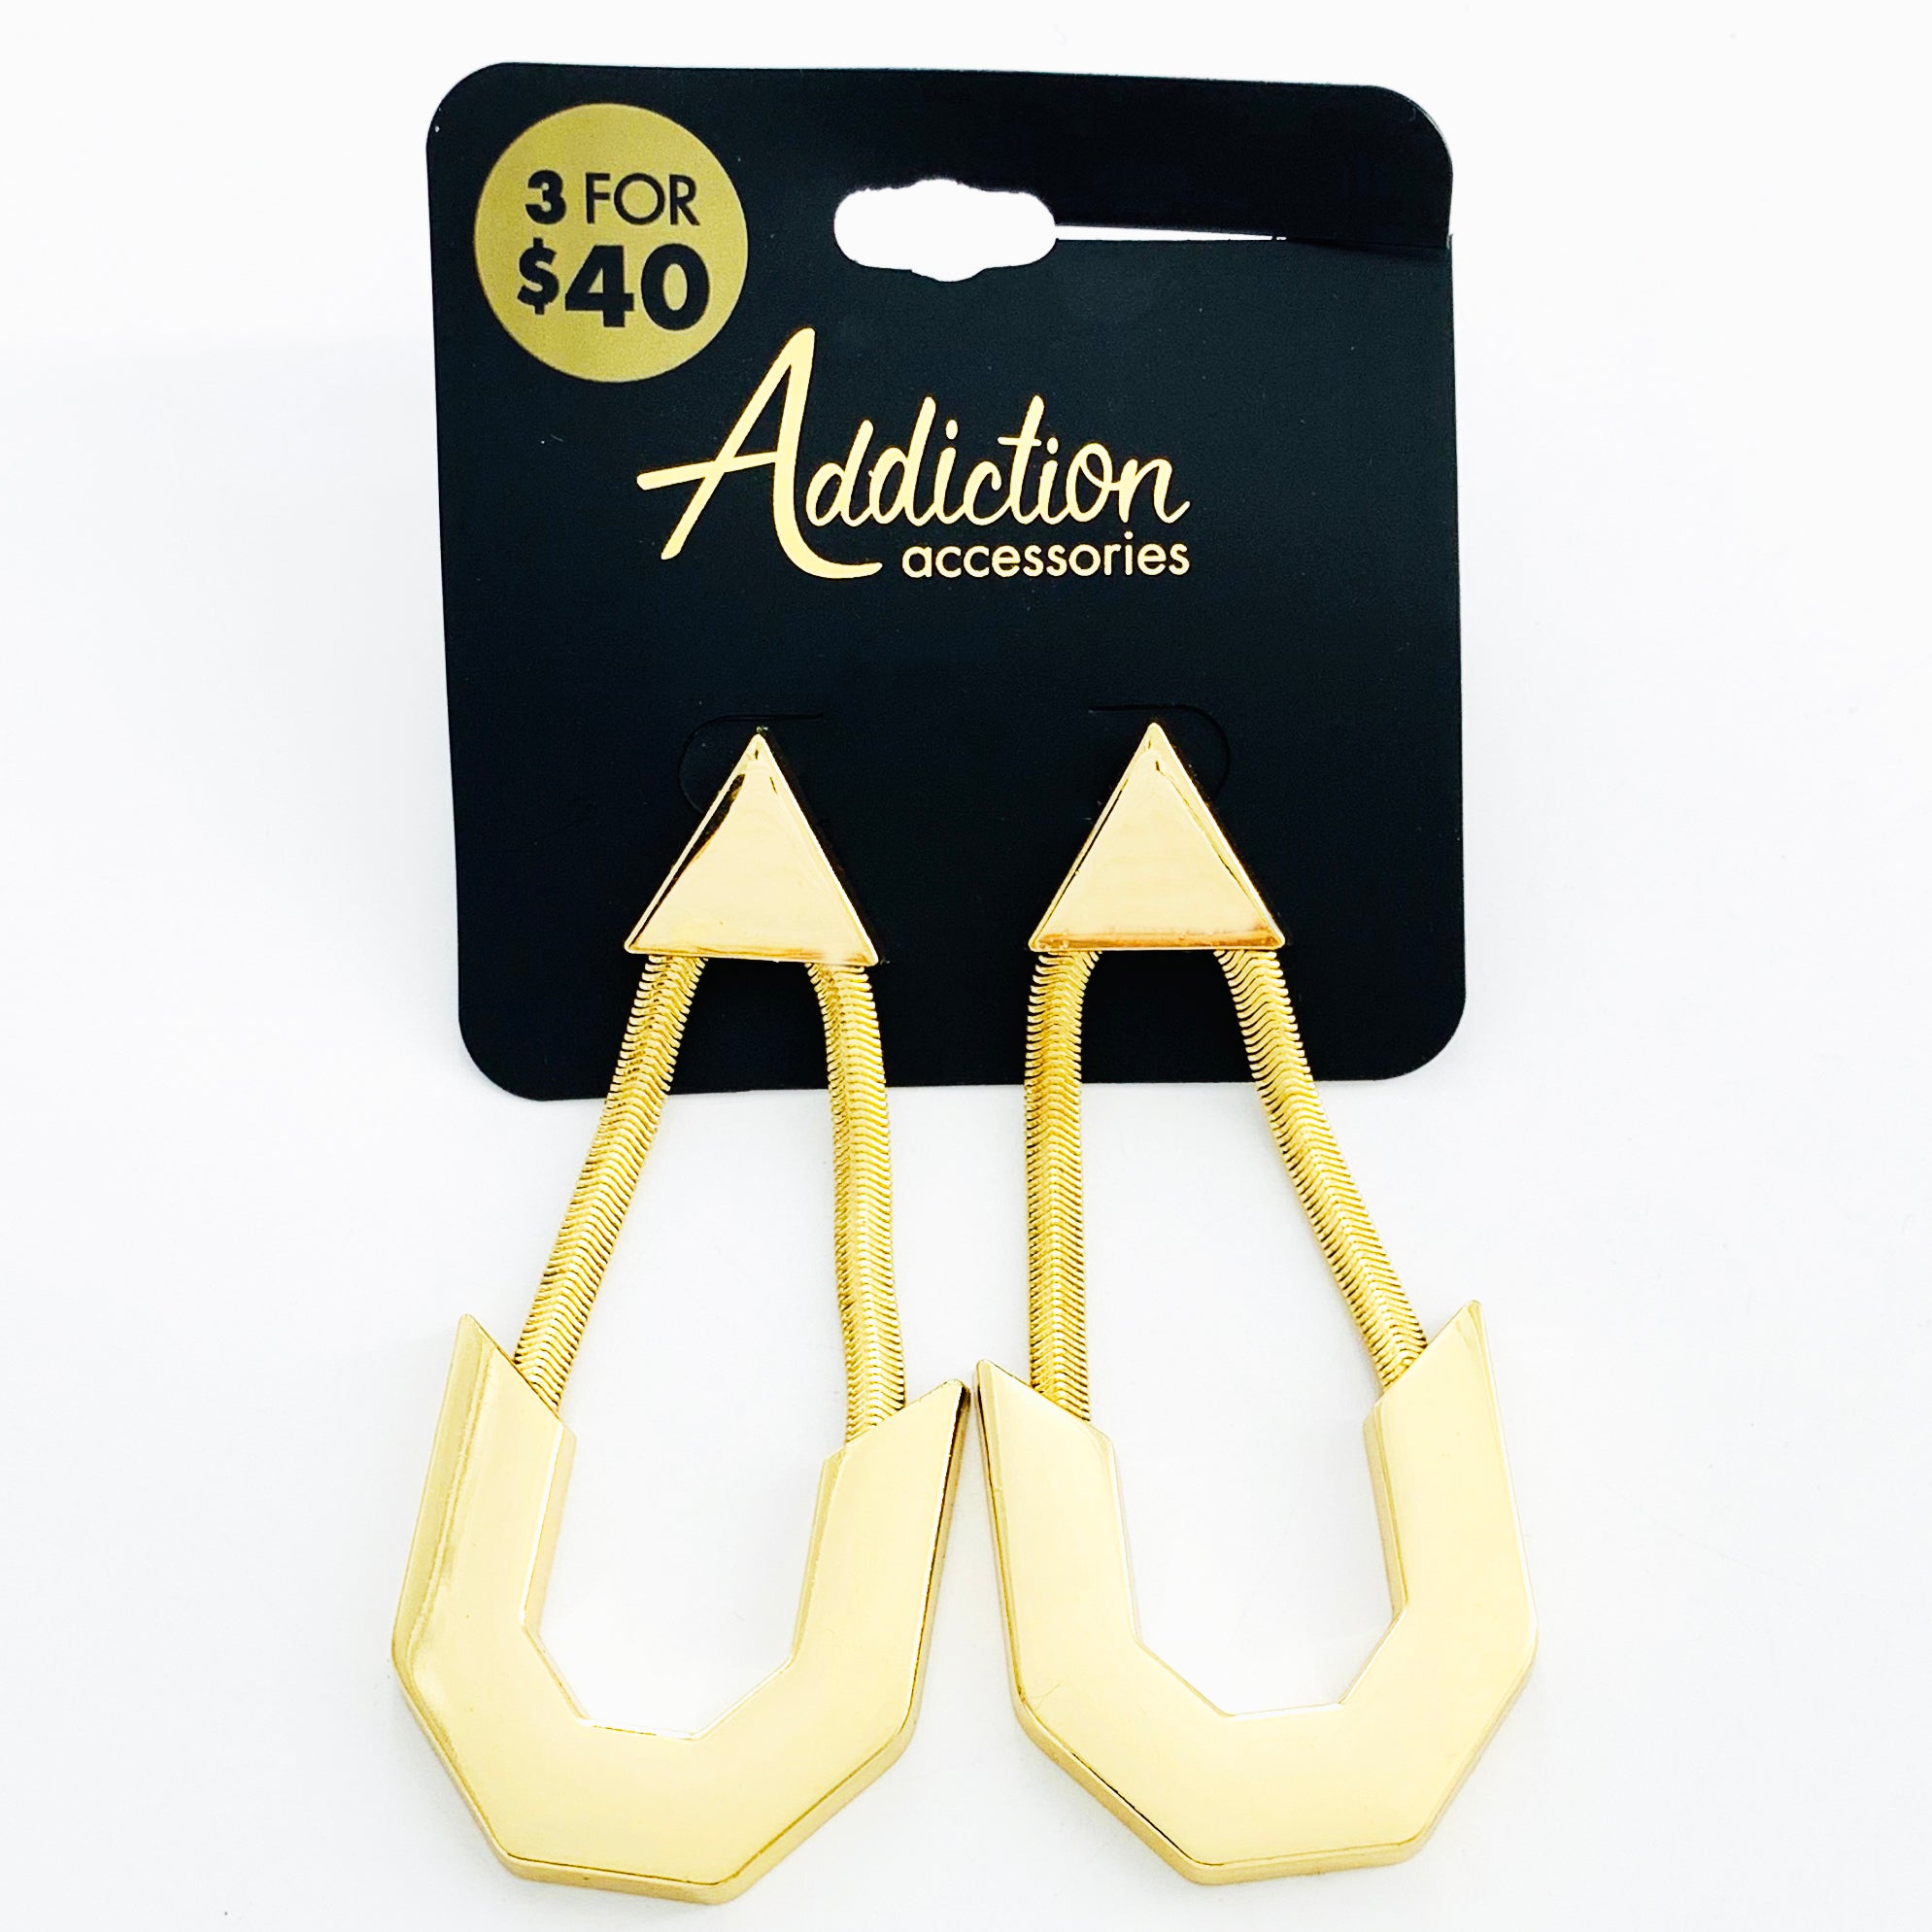 Geometric-inspired dangling gold earrings